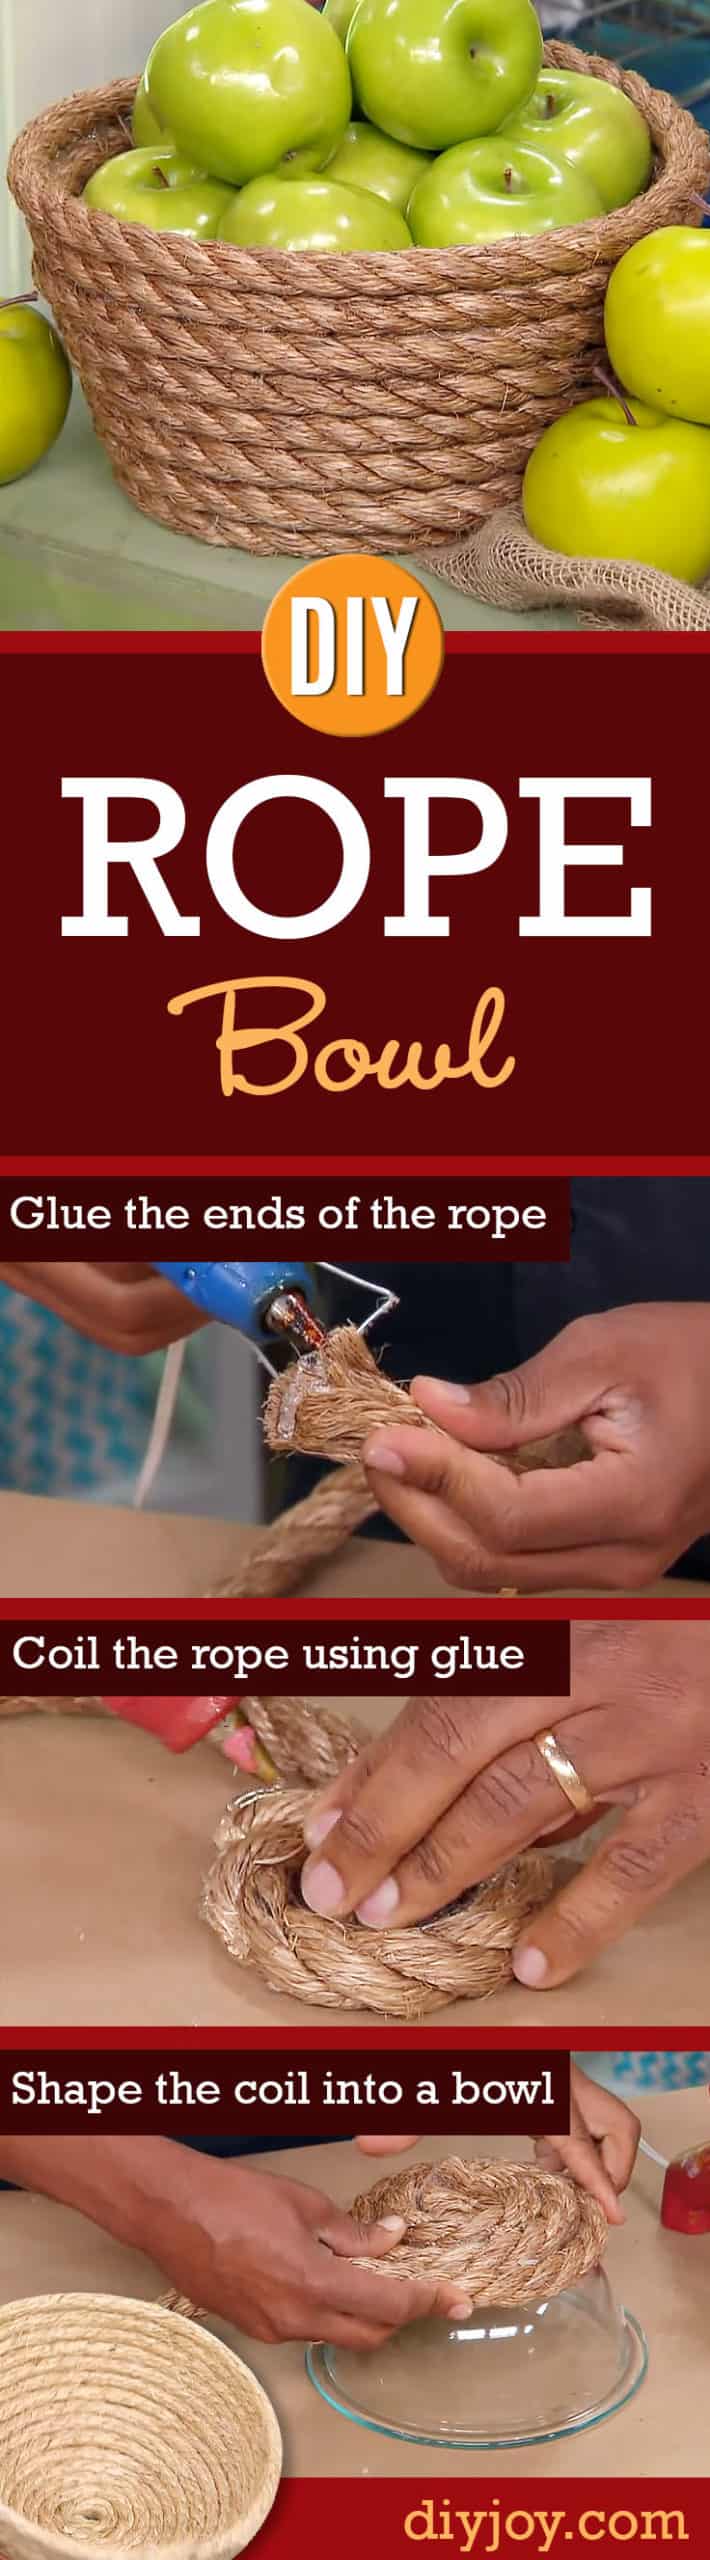 Diy rope bowls